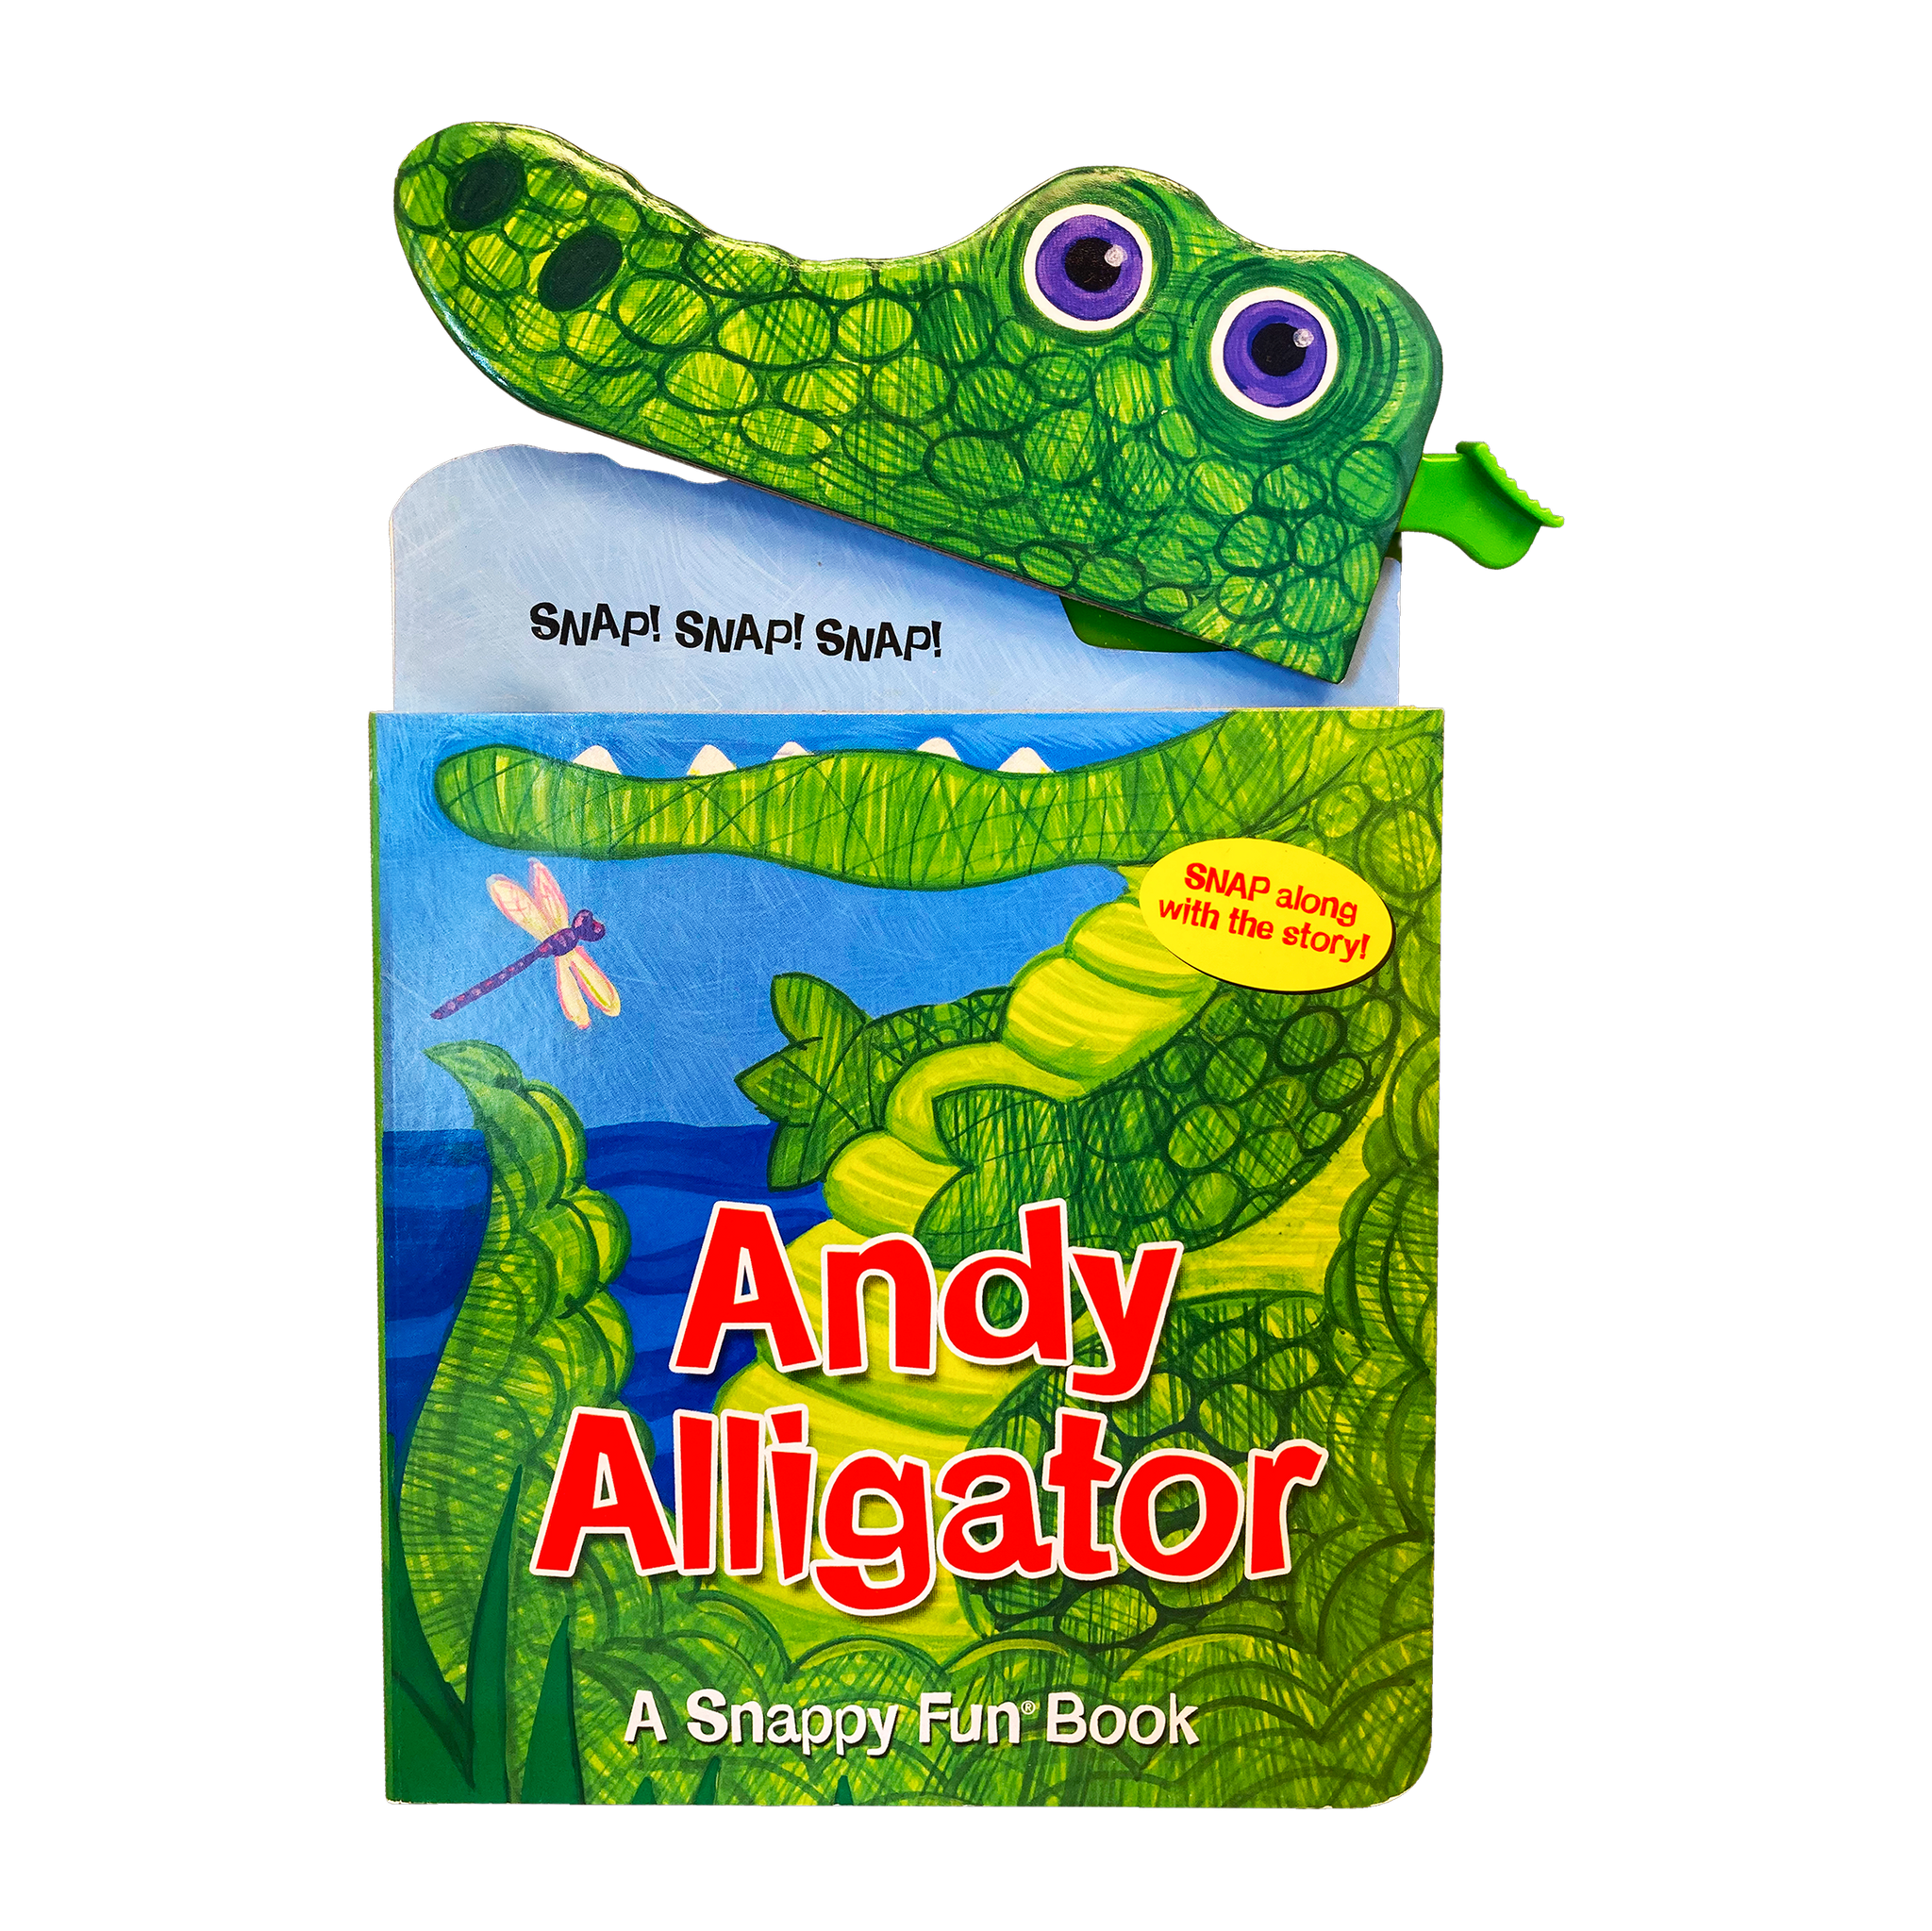 Andy Alligator - A Snappy Fun Alligator Board Book